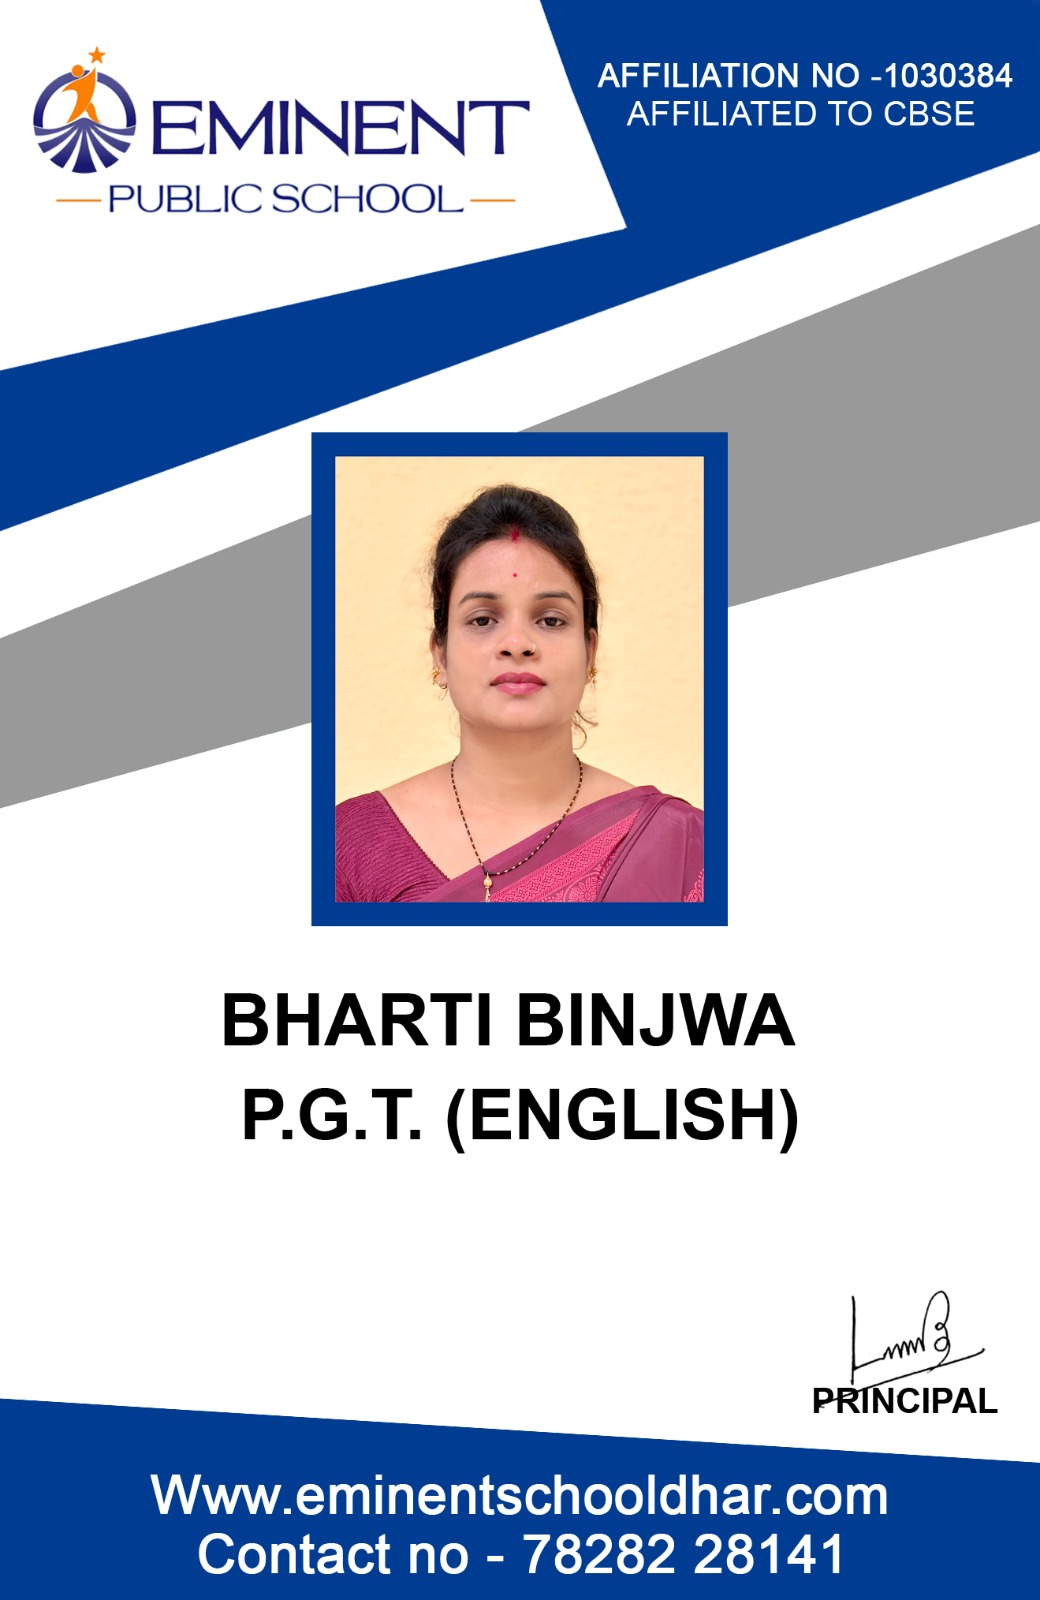 MRS. BHARTI BINJWA